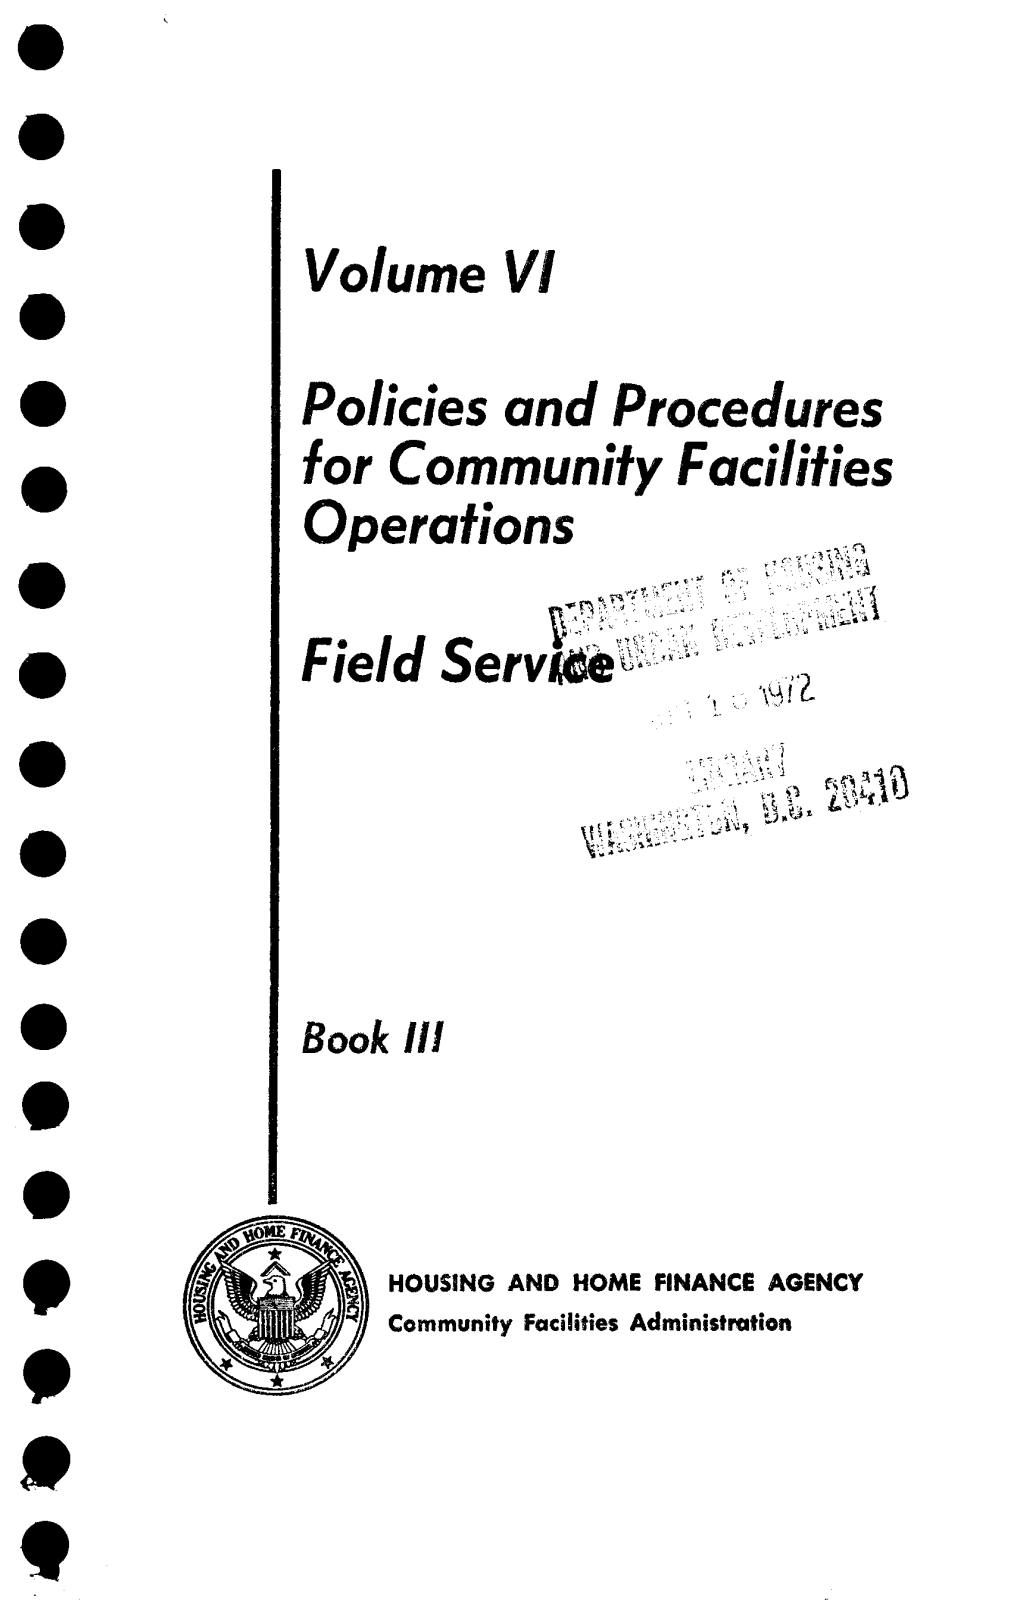 Policies Qnd Procedures for Community F Acilities Operofions I'i;' R:Rir'li?Iit - '"'::', ' S*,F :T'i'''l ,''" " .,Rrill Fietd Serviooiii"'' ' '-'I " ' -' L ': I '